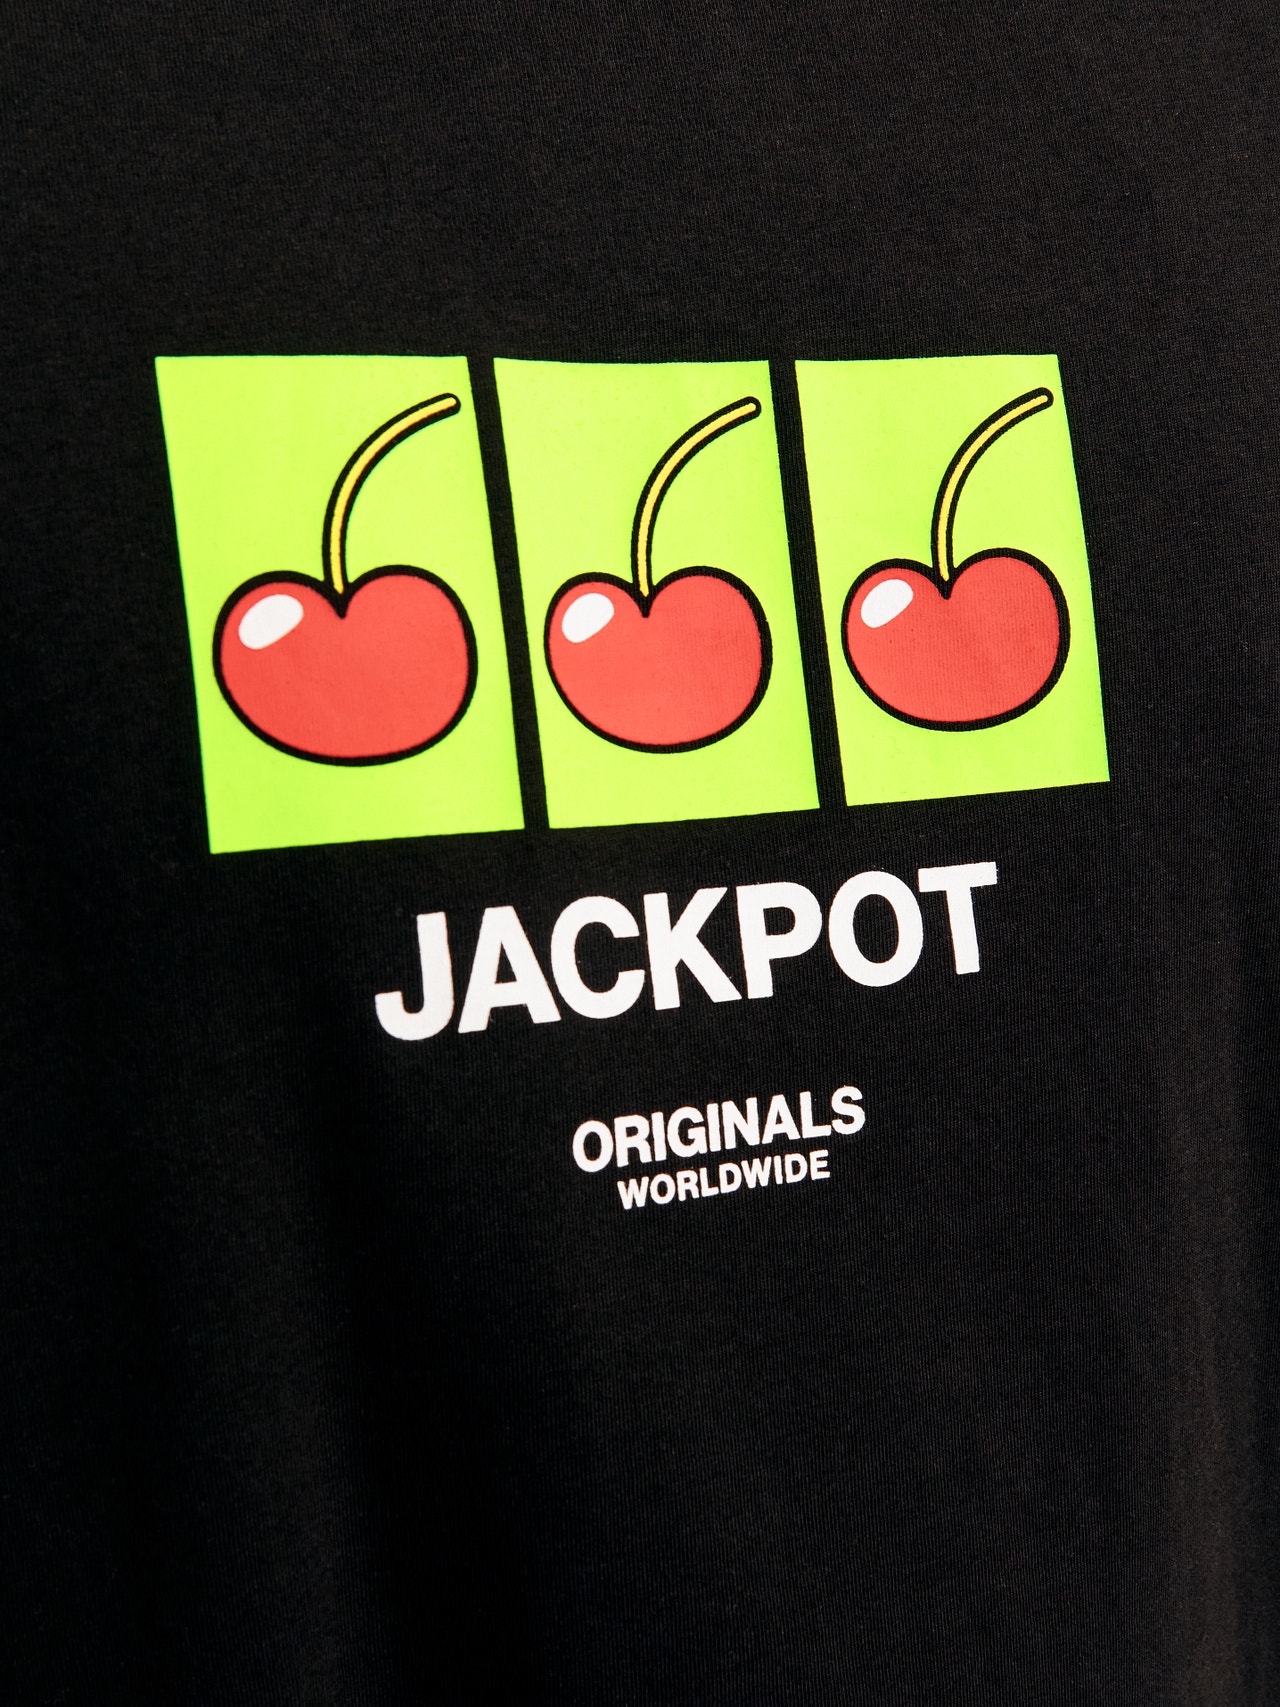 Jack & Jones Plus Size Printed T-shirt -Black - 12257567